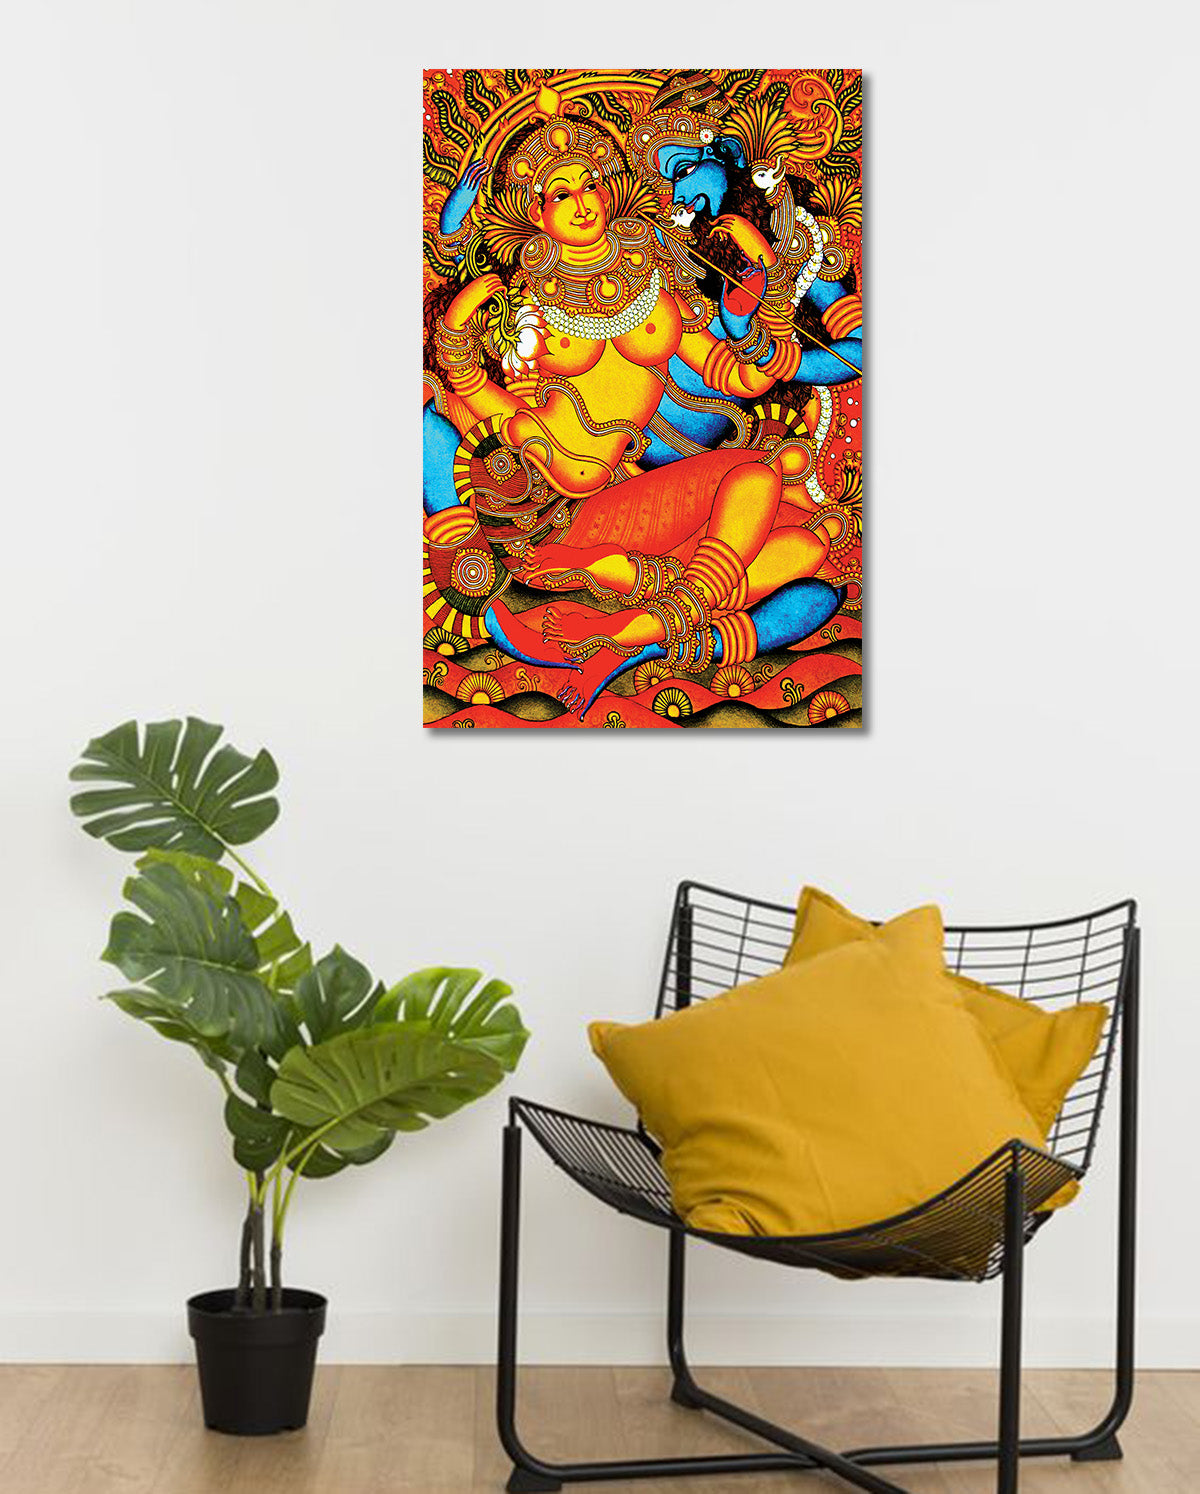 Shiva Parvati - Unframed Canvas Painting